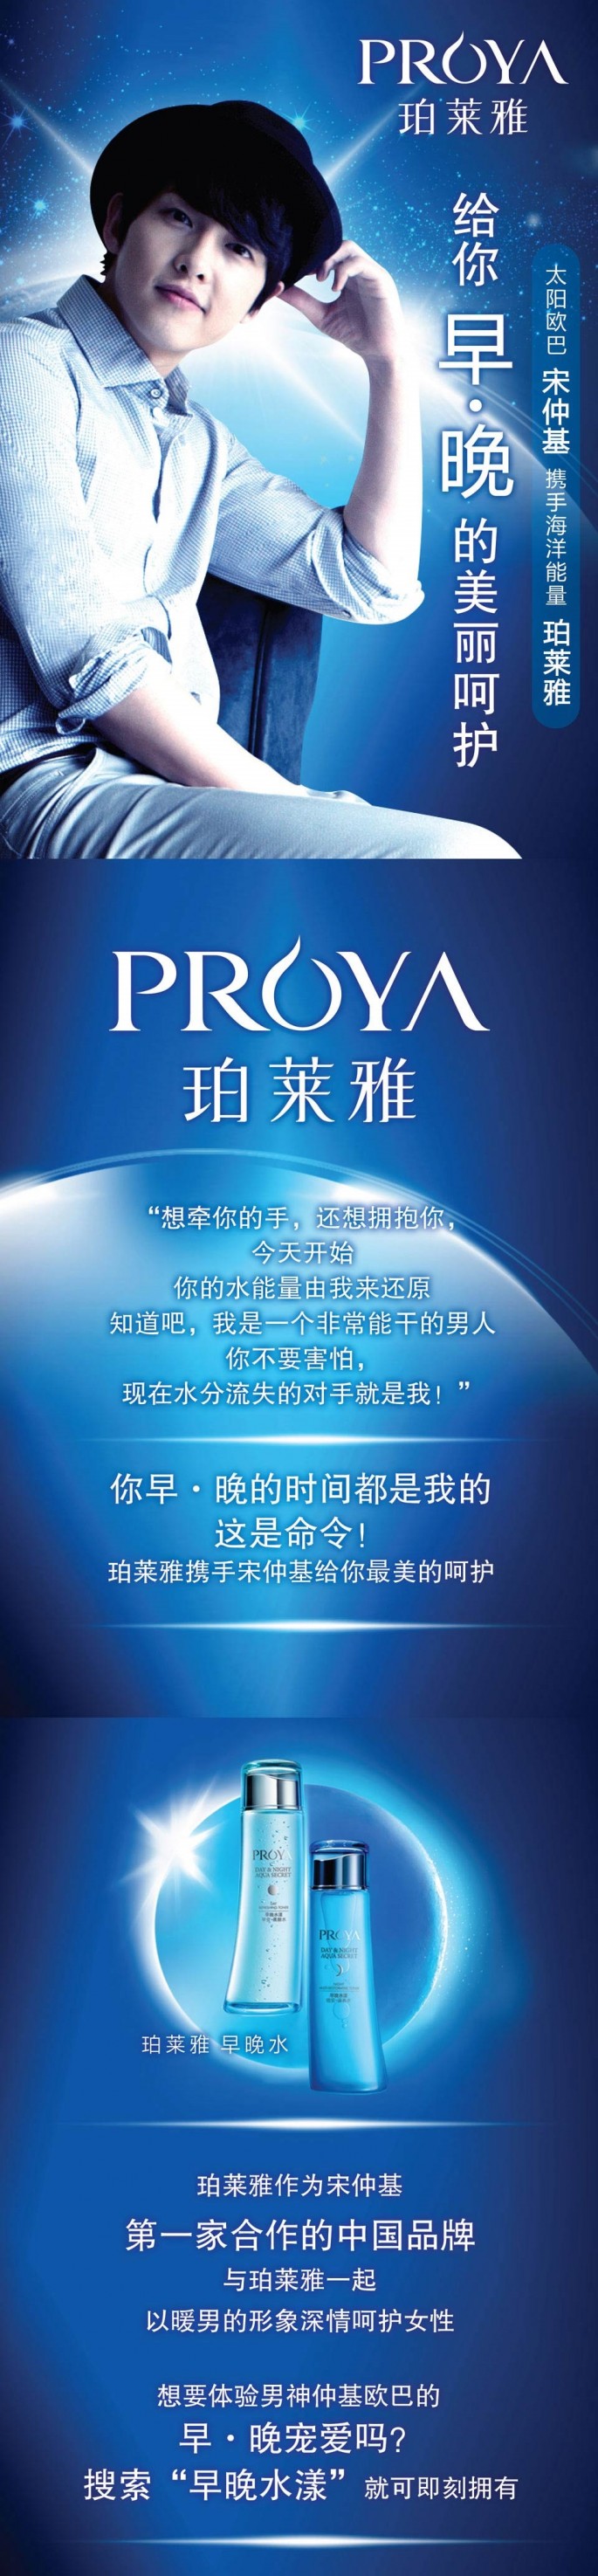 Song Joong-ki Proya Endorsement